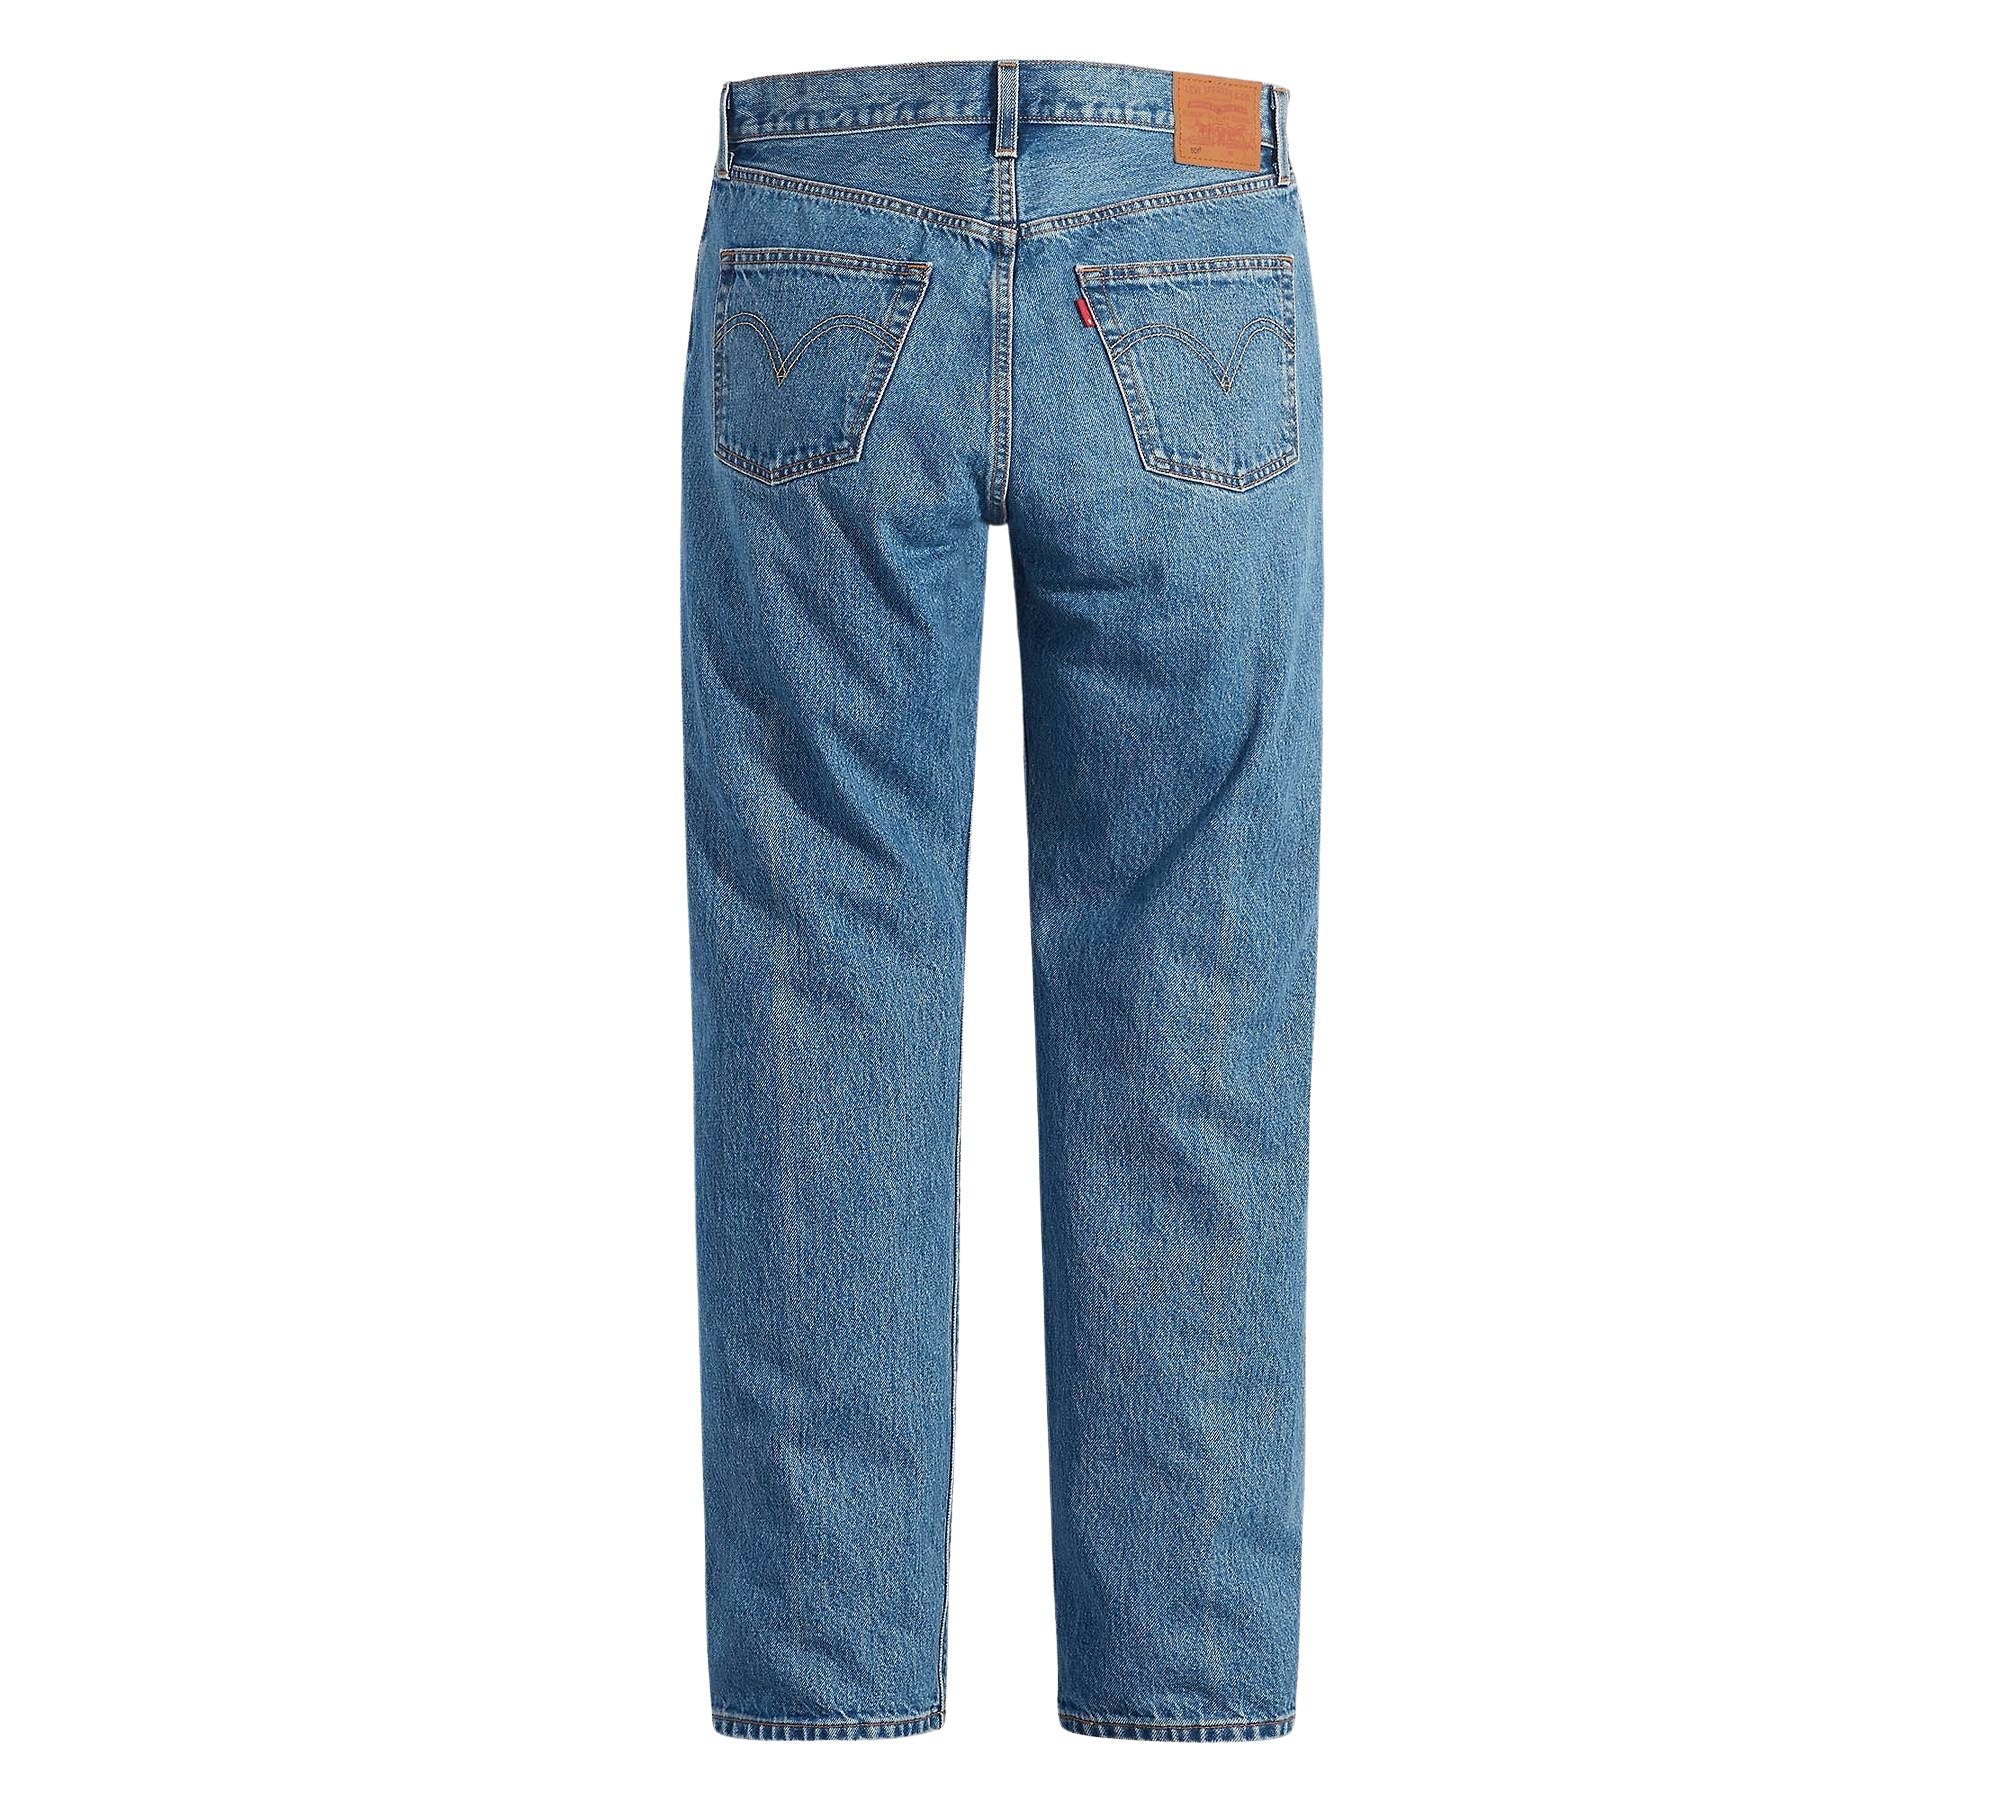 4 Pack - Vintage LEVI'S Classic Blue Zip Fly Jeans - Waist 36 - Length 34 - Vintage Superstore Online